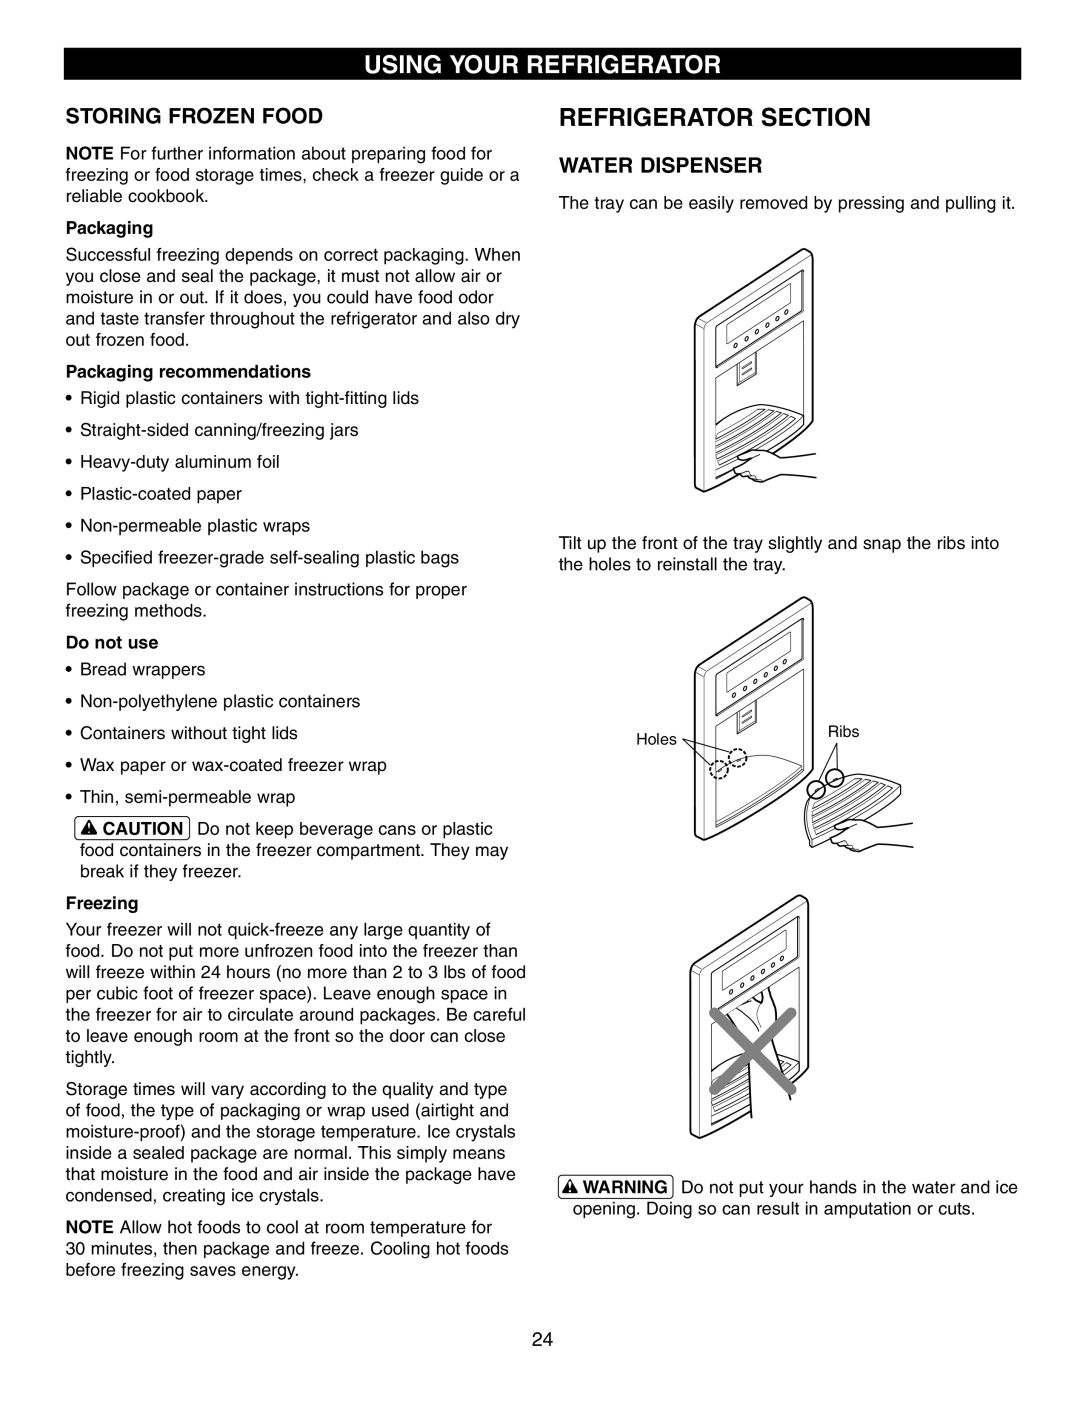 LG Electronics LFX25950 manual Refrigerator Section, Using Your Refrigerator, Storing Frozen Food, Water Dispenser 